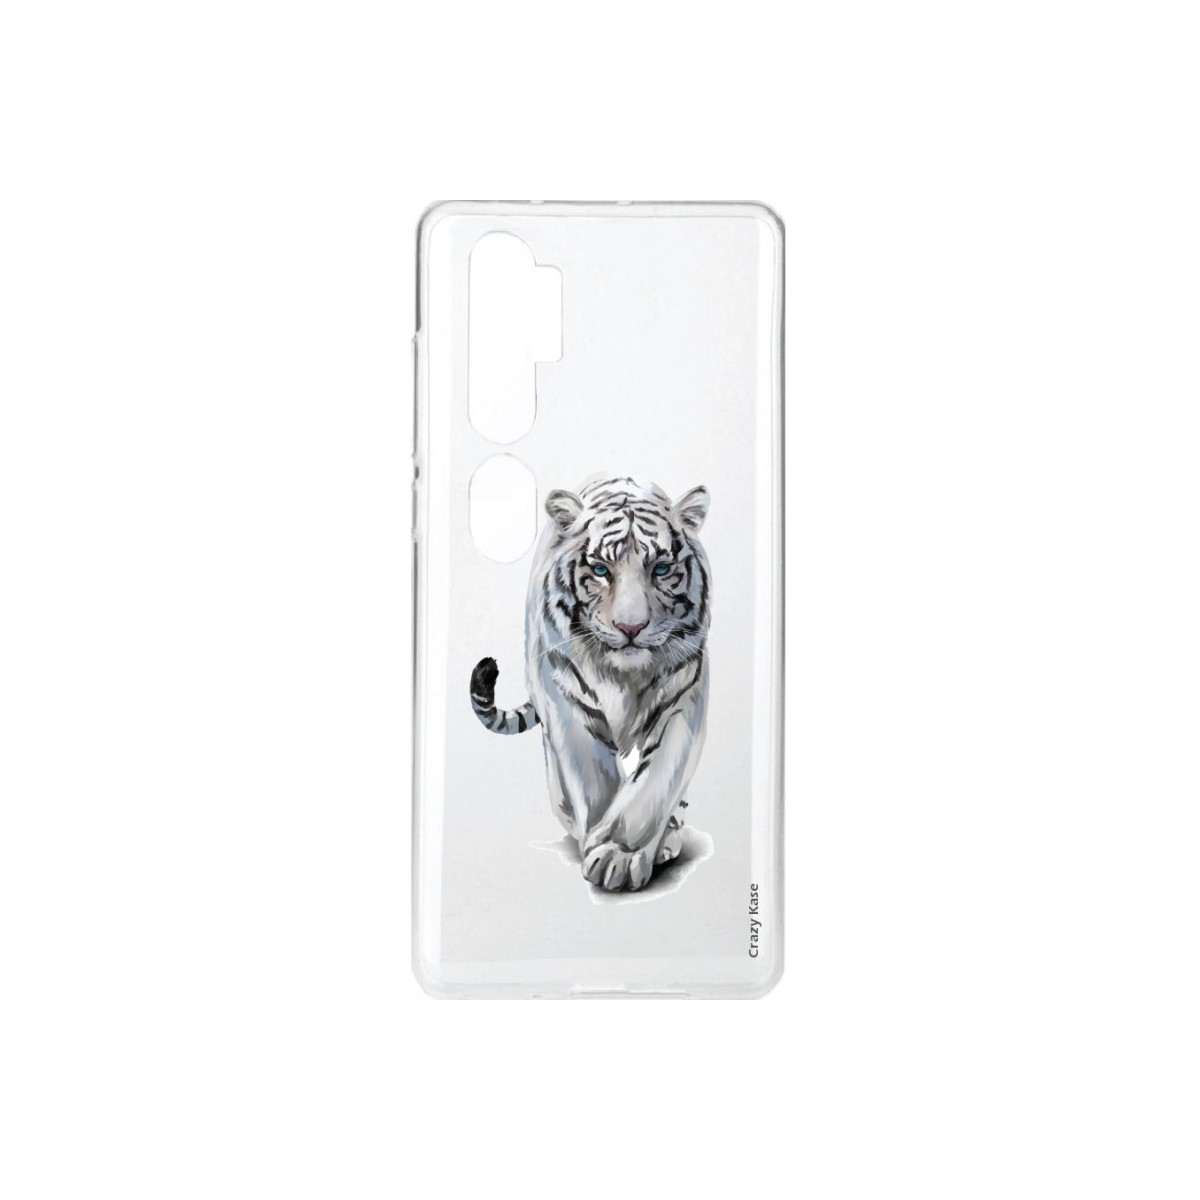 Coque pour Xiaomi Mi Note 10 souple Tigre blanc Crazy Kase